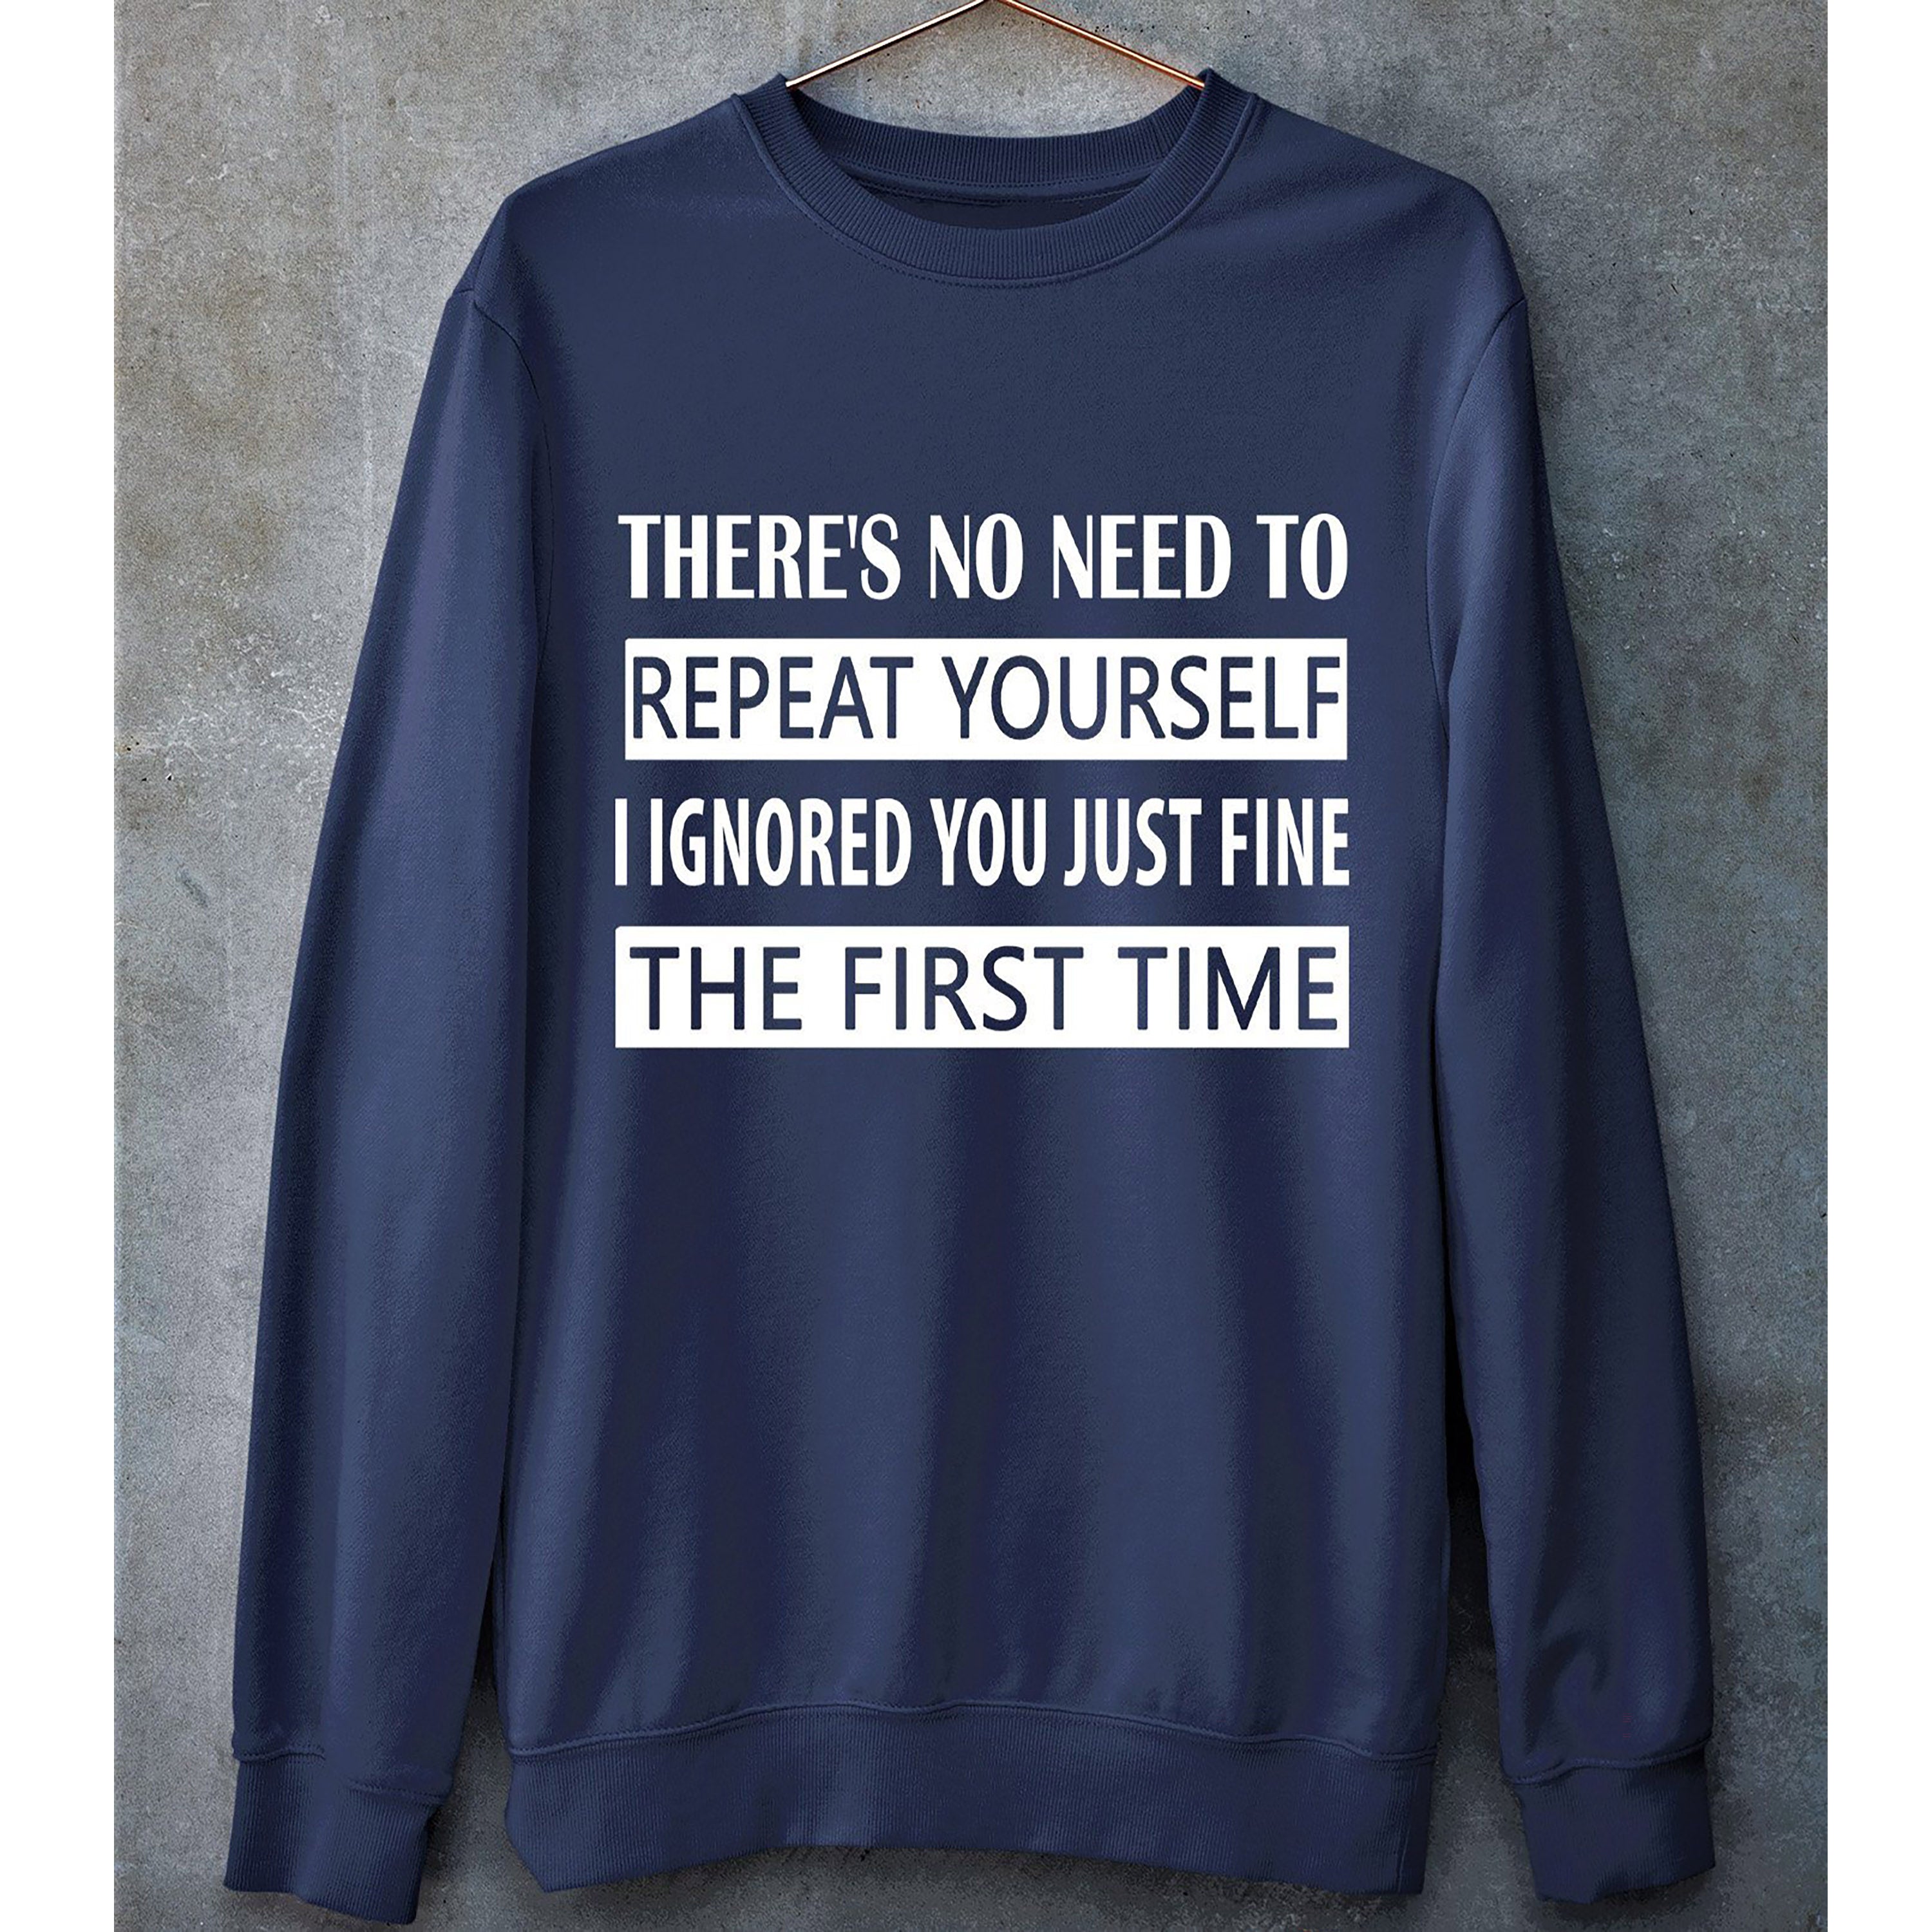 "NO NEED TO REPEAT YOURSELF" - Hoodie & Sweatshirt.